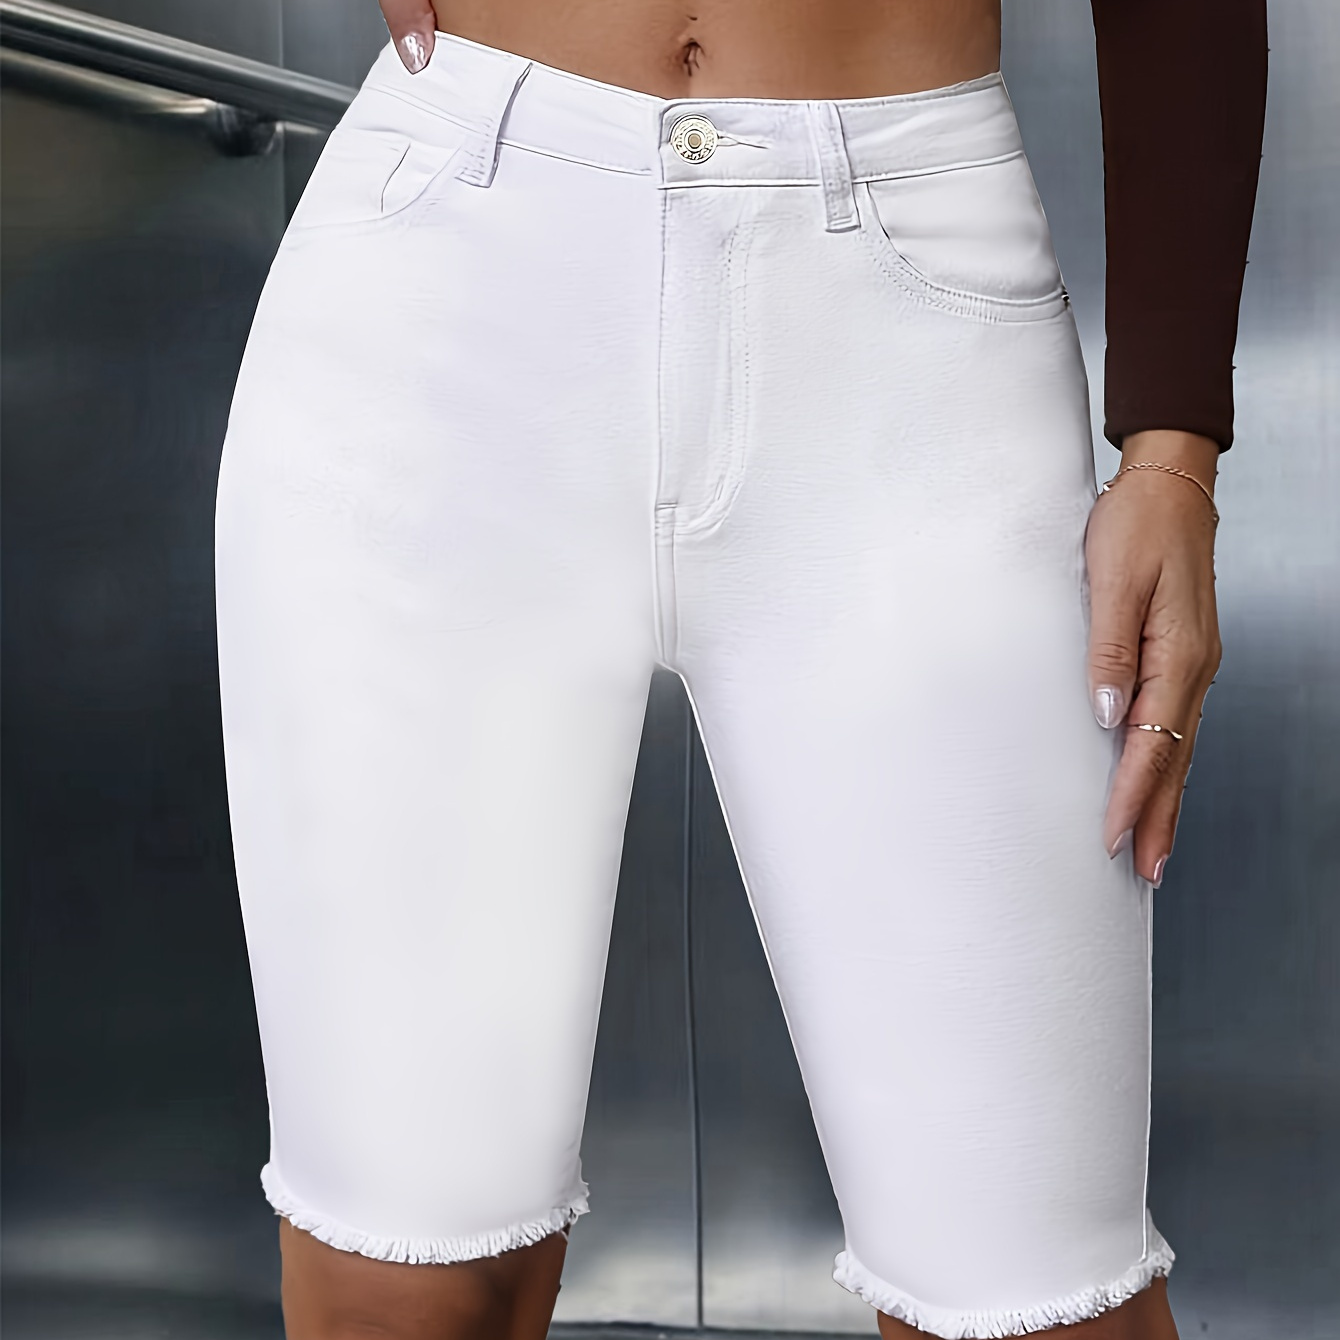 

Women's Elegant High-waist Plain White Denim Bermuda Shorts, Stretchy Slim-fit With Frayed Hem, Versatile Fashion For Spring/summer